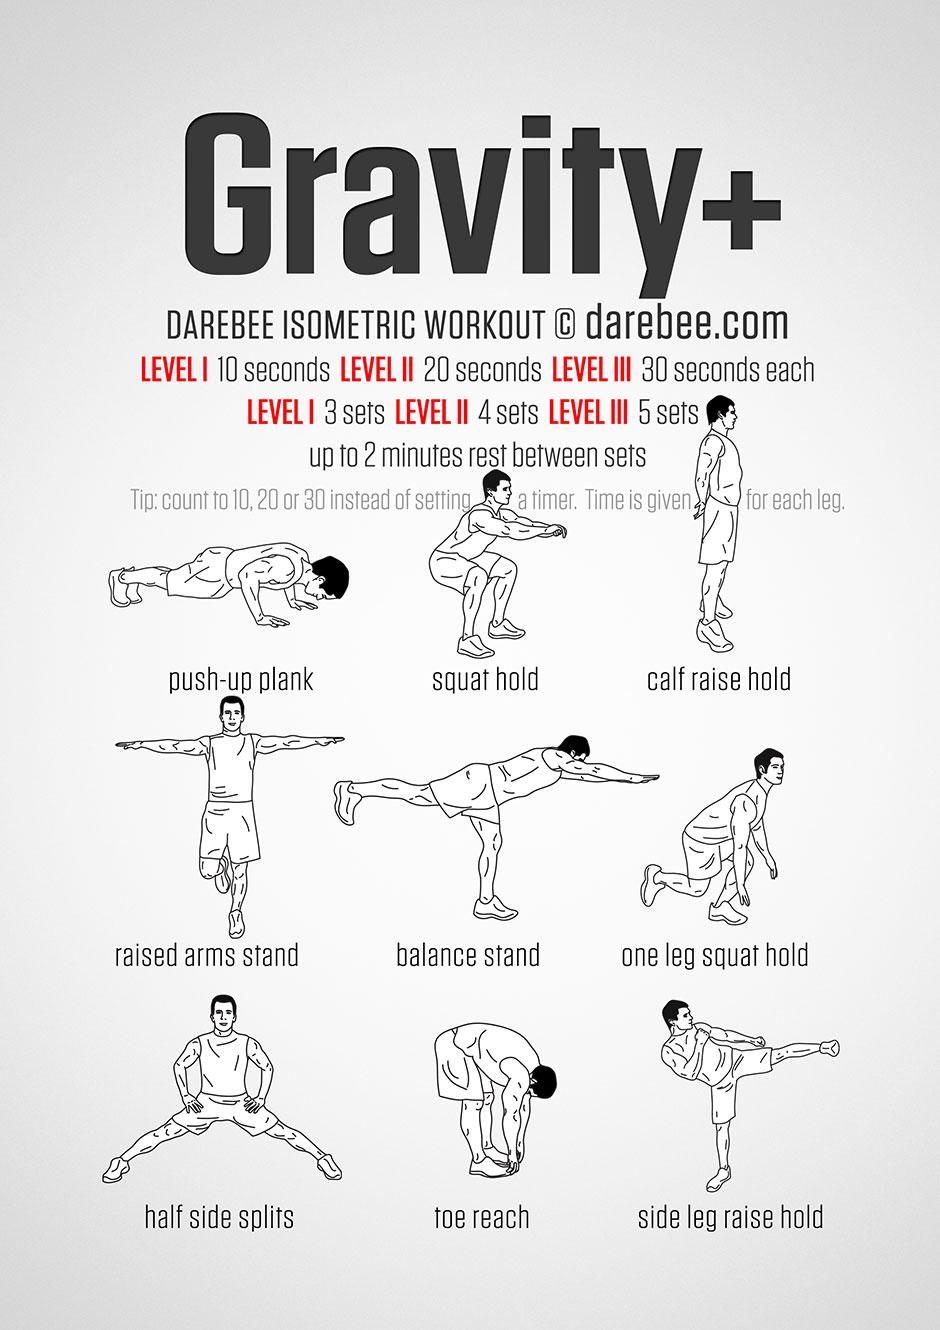 DAREBEE on Twitter: "Gravity + Workout http://t.co/iG7VkKSPG2